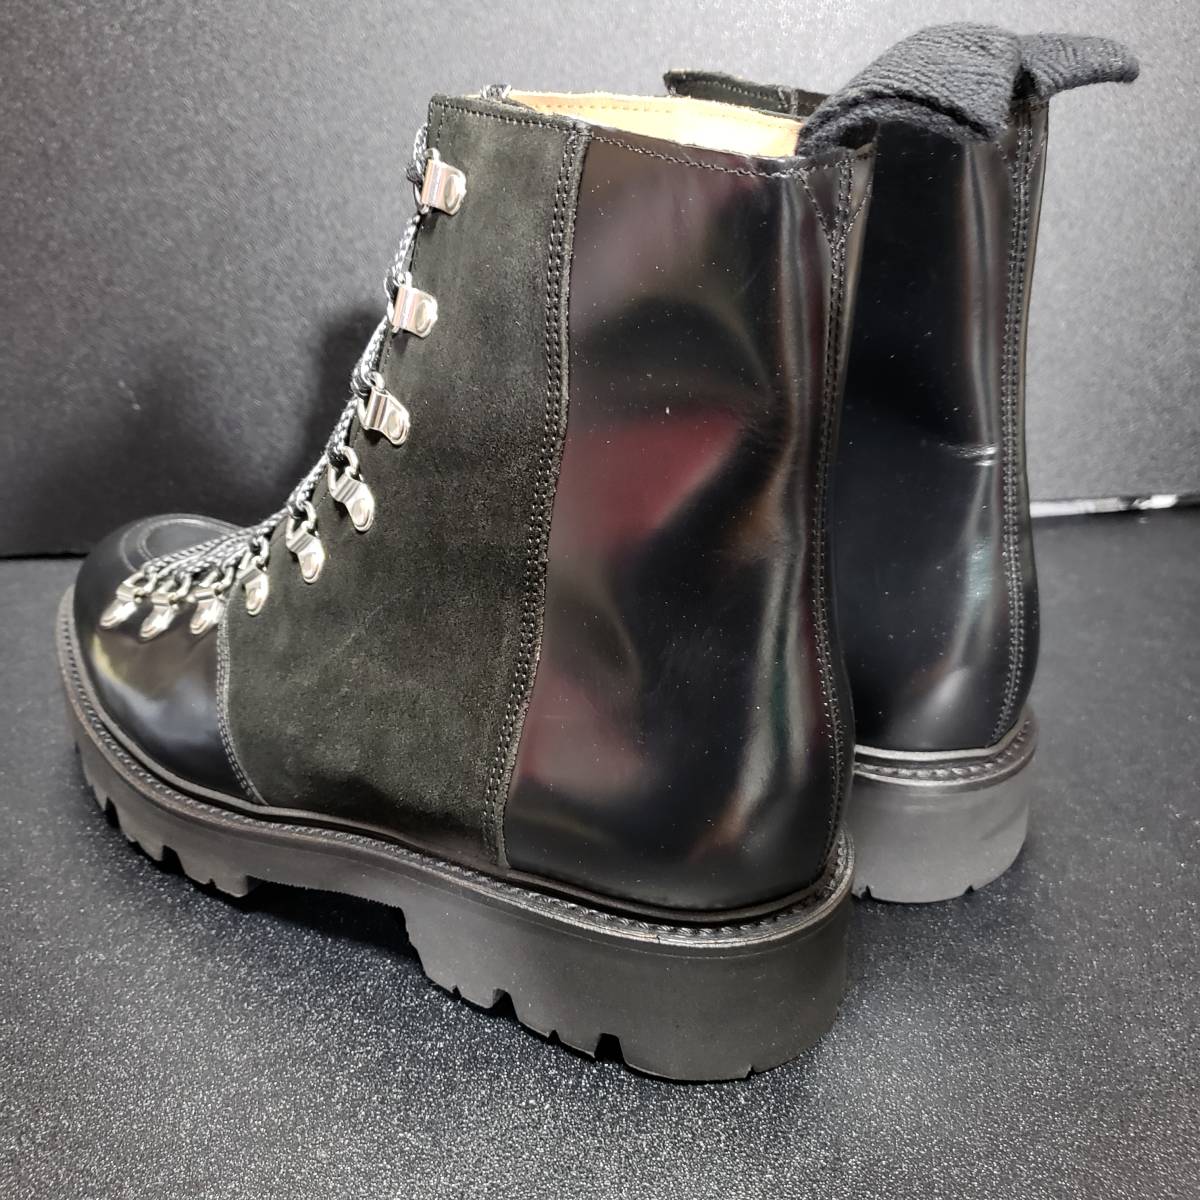  Glenn son(Grenson)G-TWO leather boots BRADY black 9G